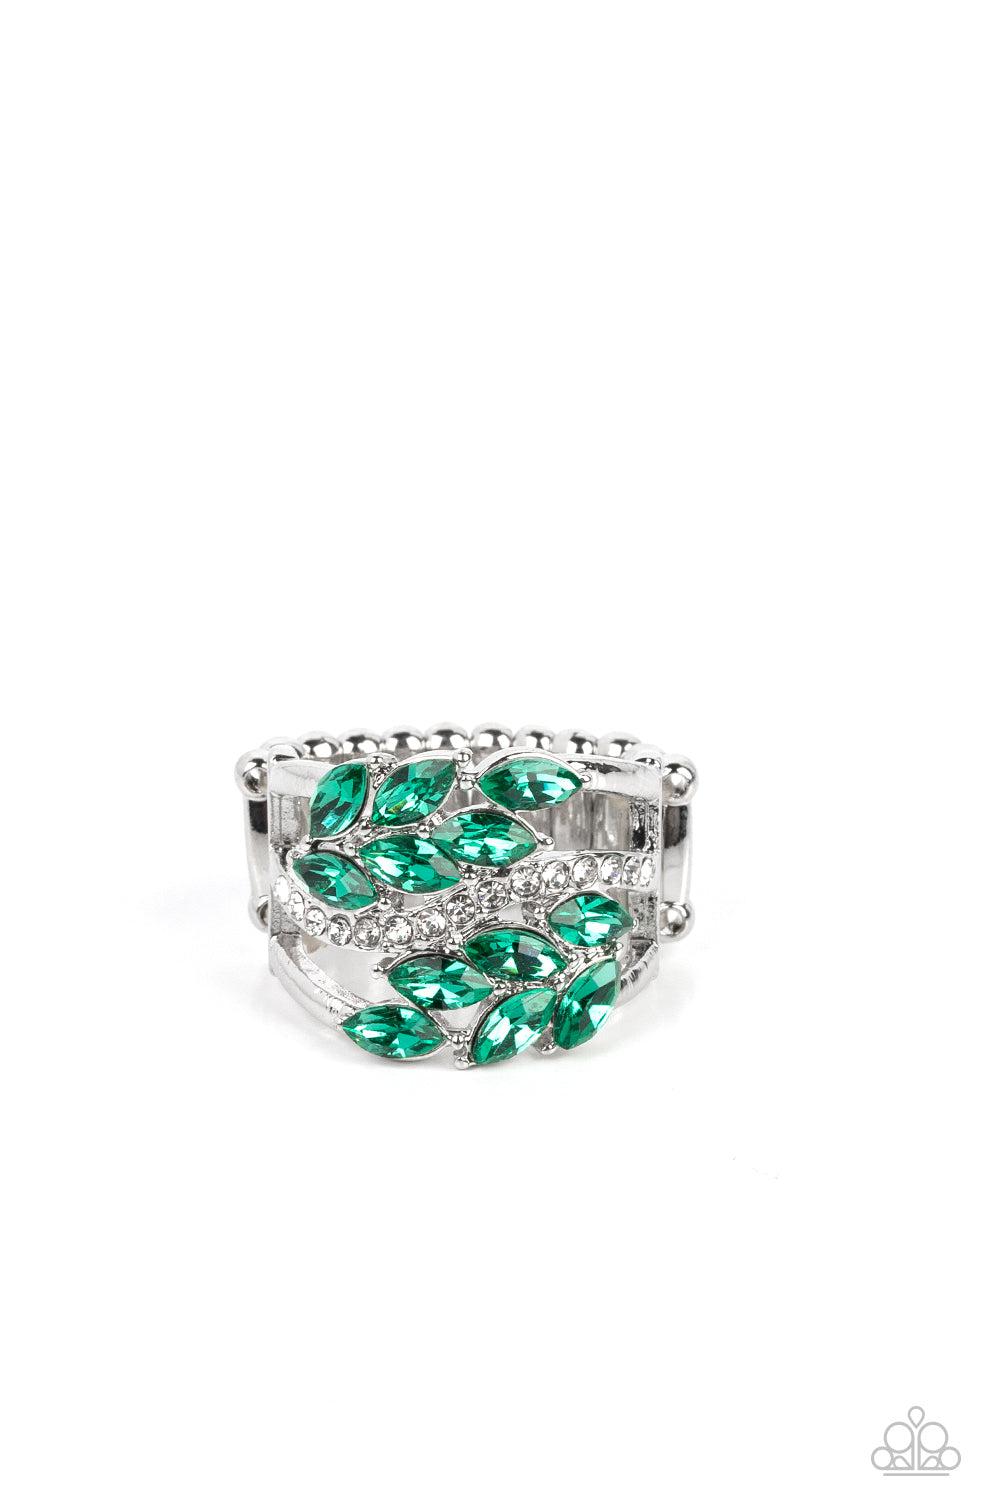 Luminously Leafy Green Rhinestone Ring - Paparazzi Accessories- lightbox - CarasShop.com - $5 Jewelry by Cara Jewels